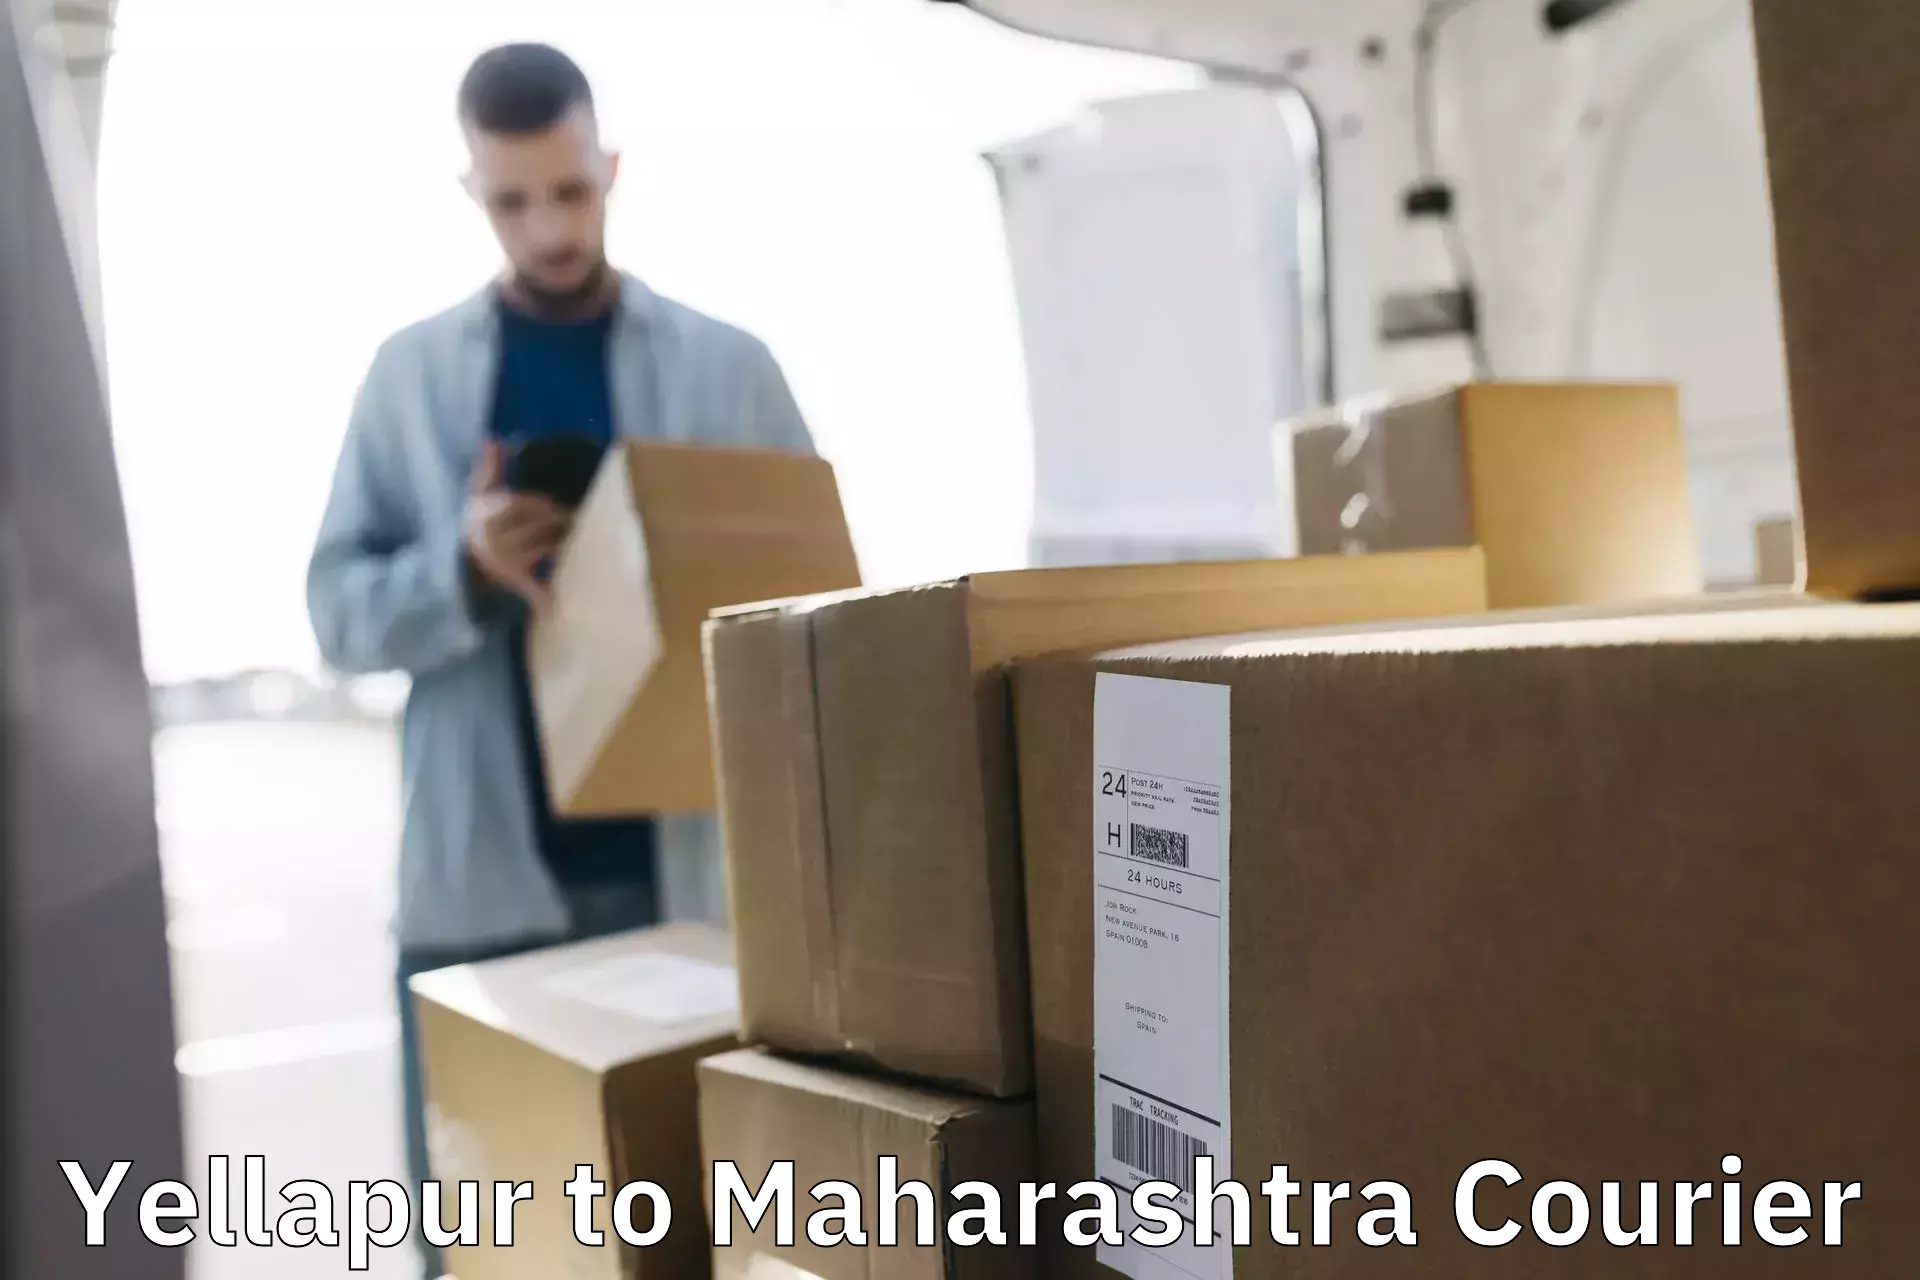 Overnight delivery services Yellapur to Maharashtra